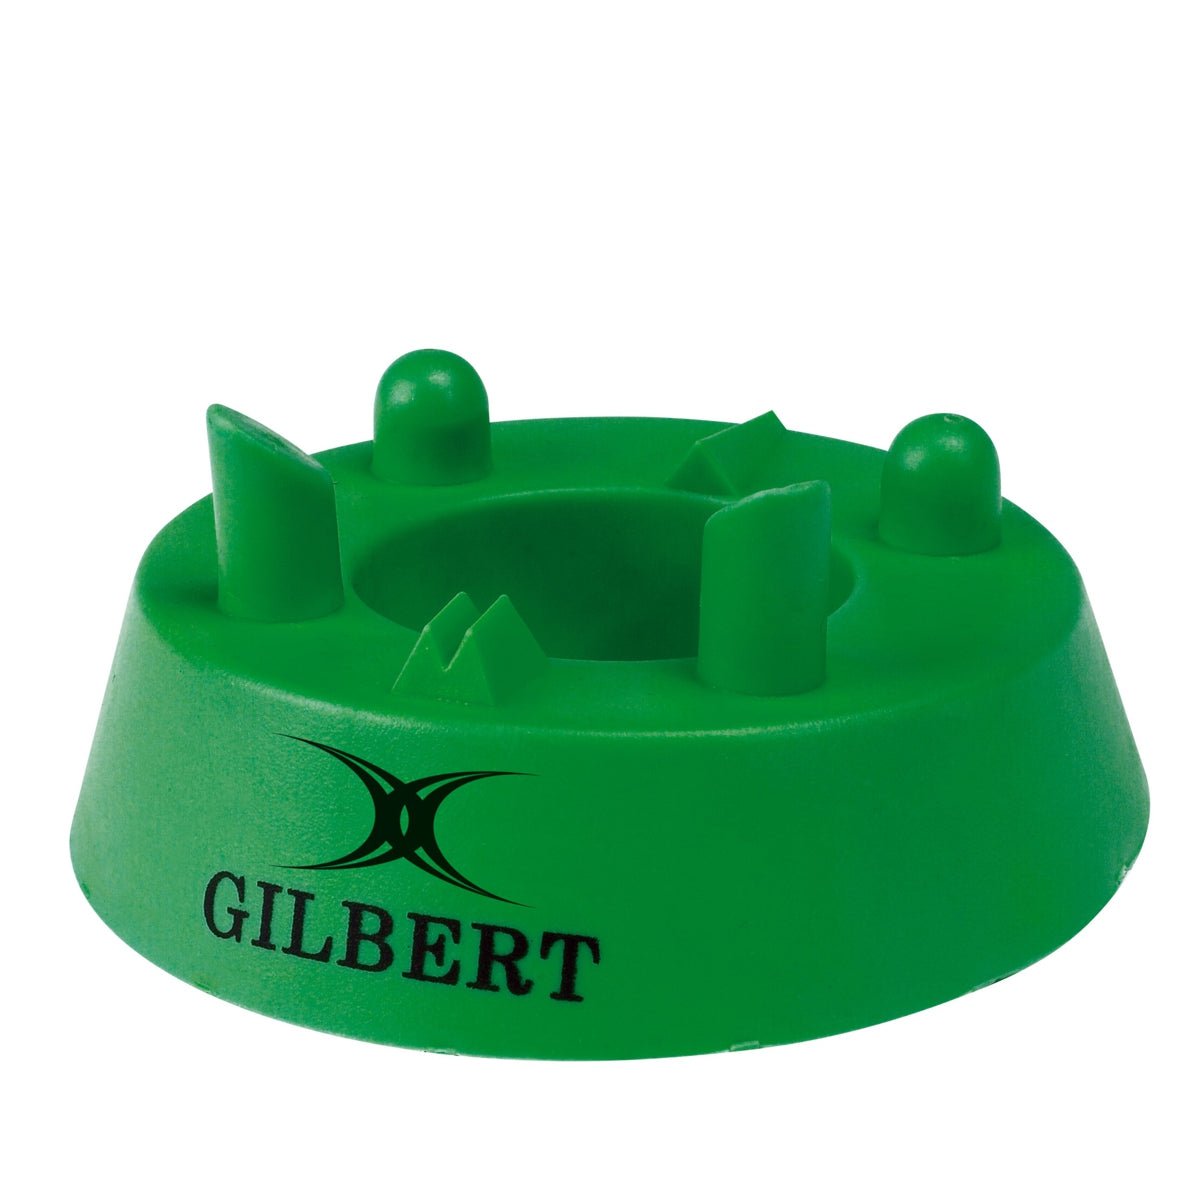 Gilbert Rugby Kicking Tee - 320 Green - Kiwisport.de